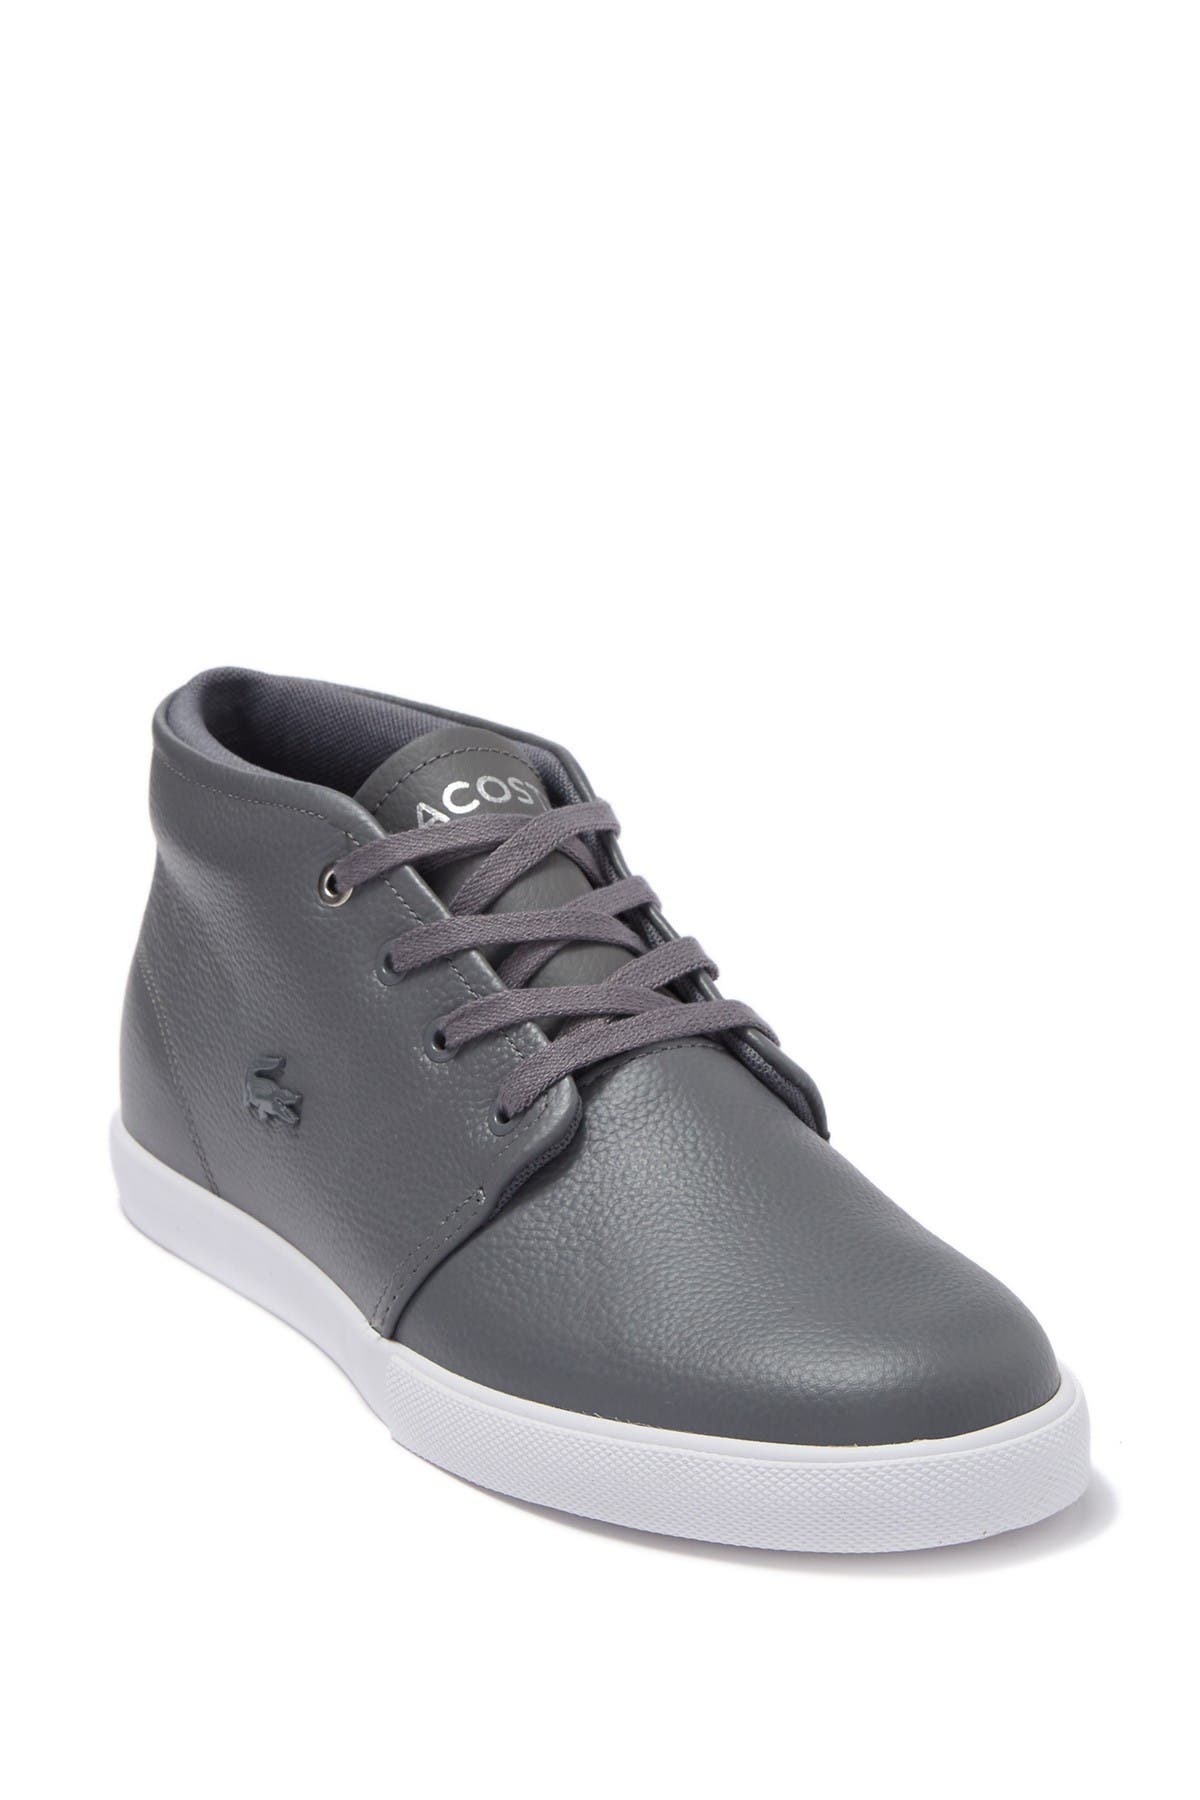 Lacoste | Asparta Leather Mid Sneaker 